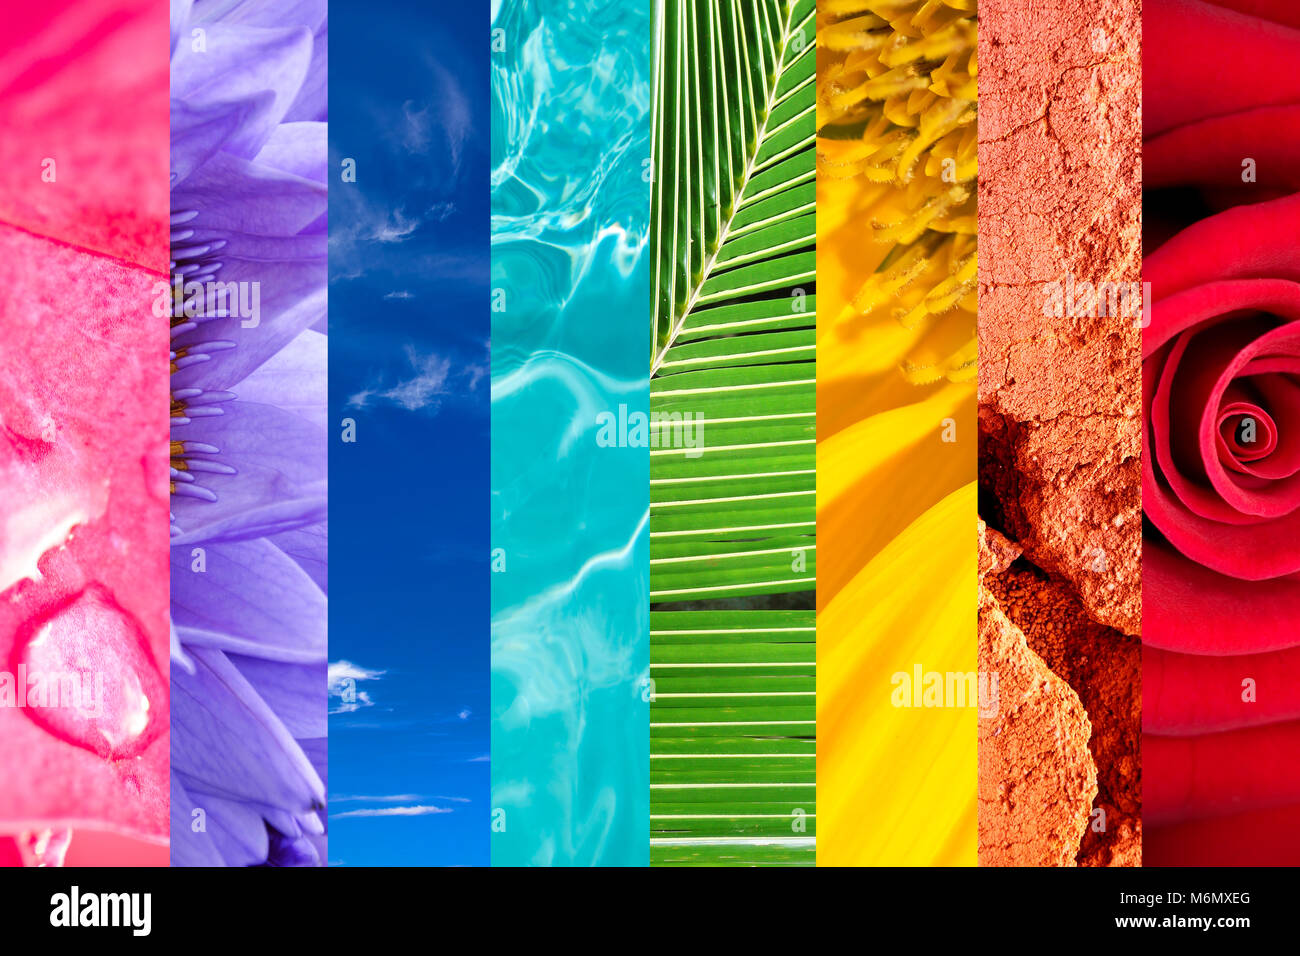 Regenbogen der Natur, bunten Natur Foto Collage, lebendige Farben der Natur Stockfoto